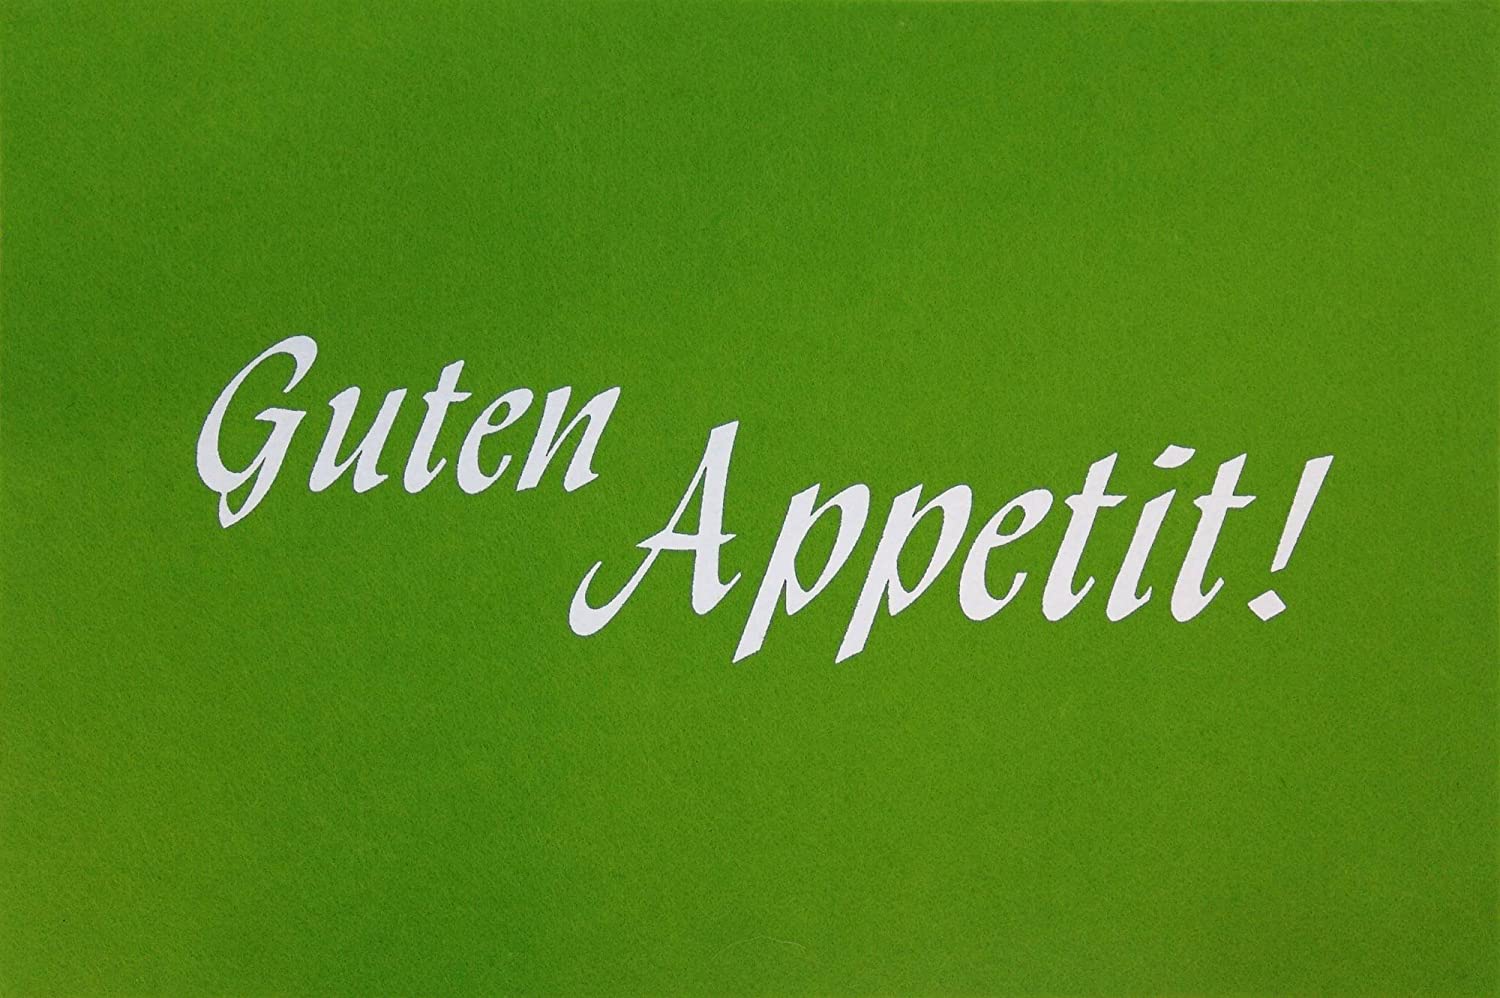 Motiv: Guten Appetit! (grün)